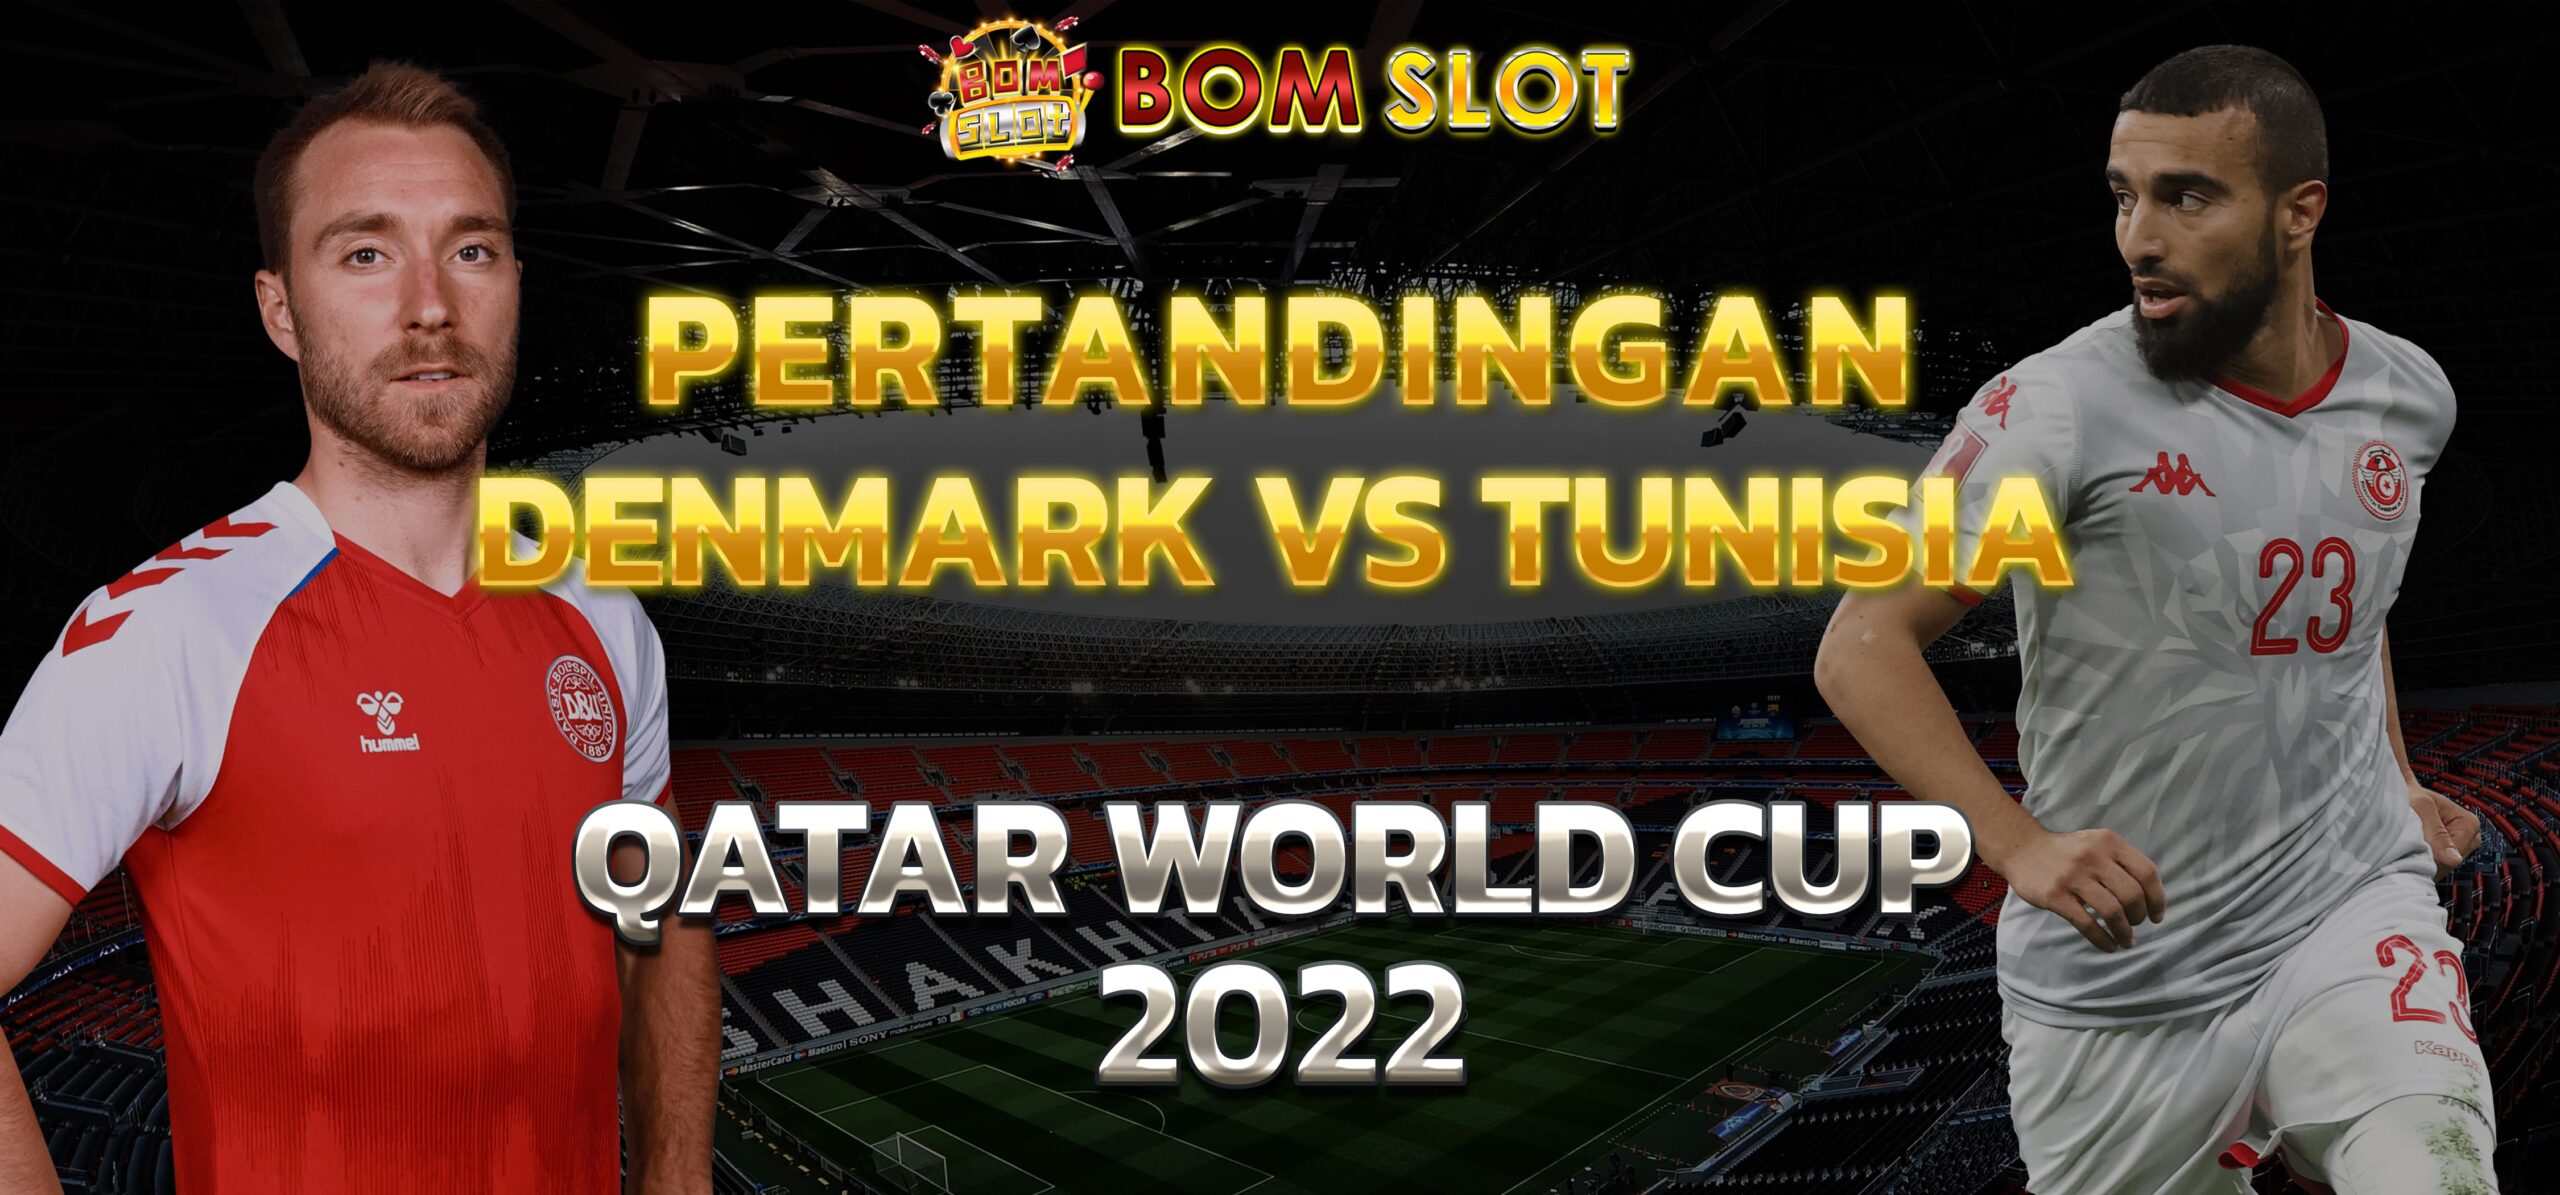 Pertandingan Denmark vs Tunisia Qatar World Cup 2022